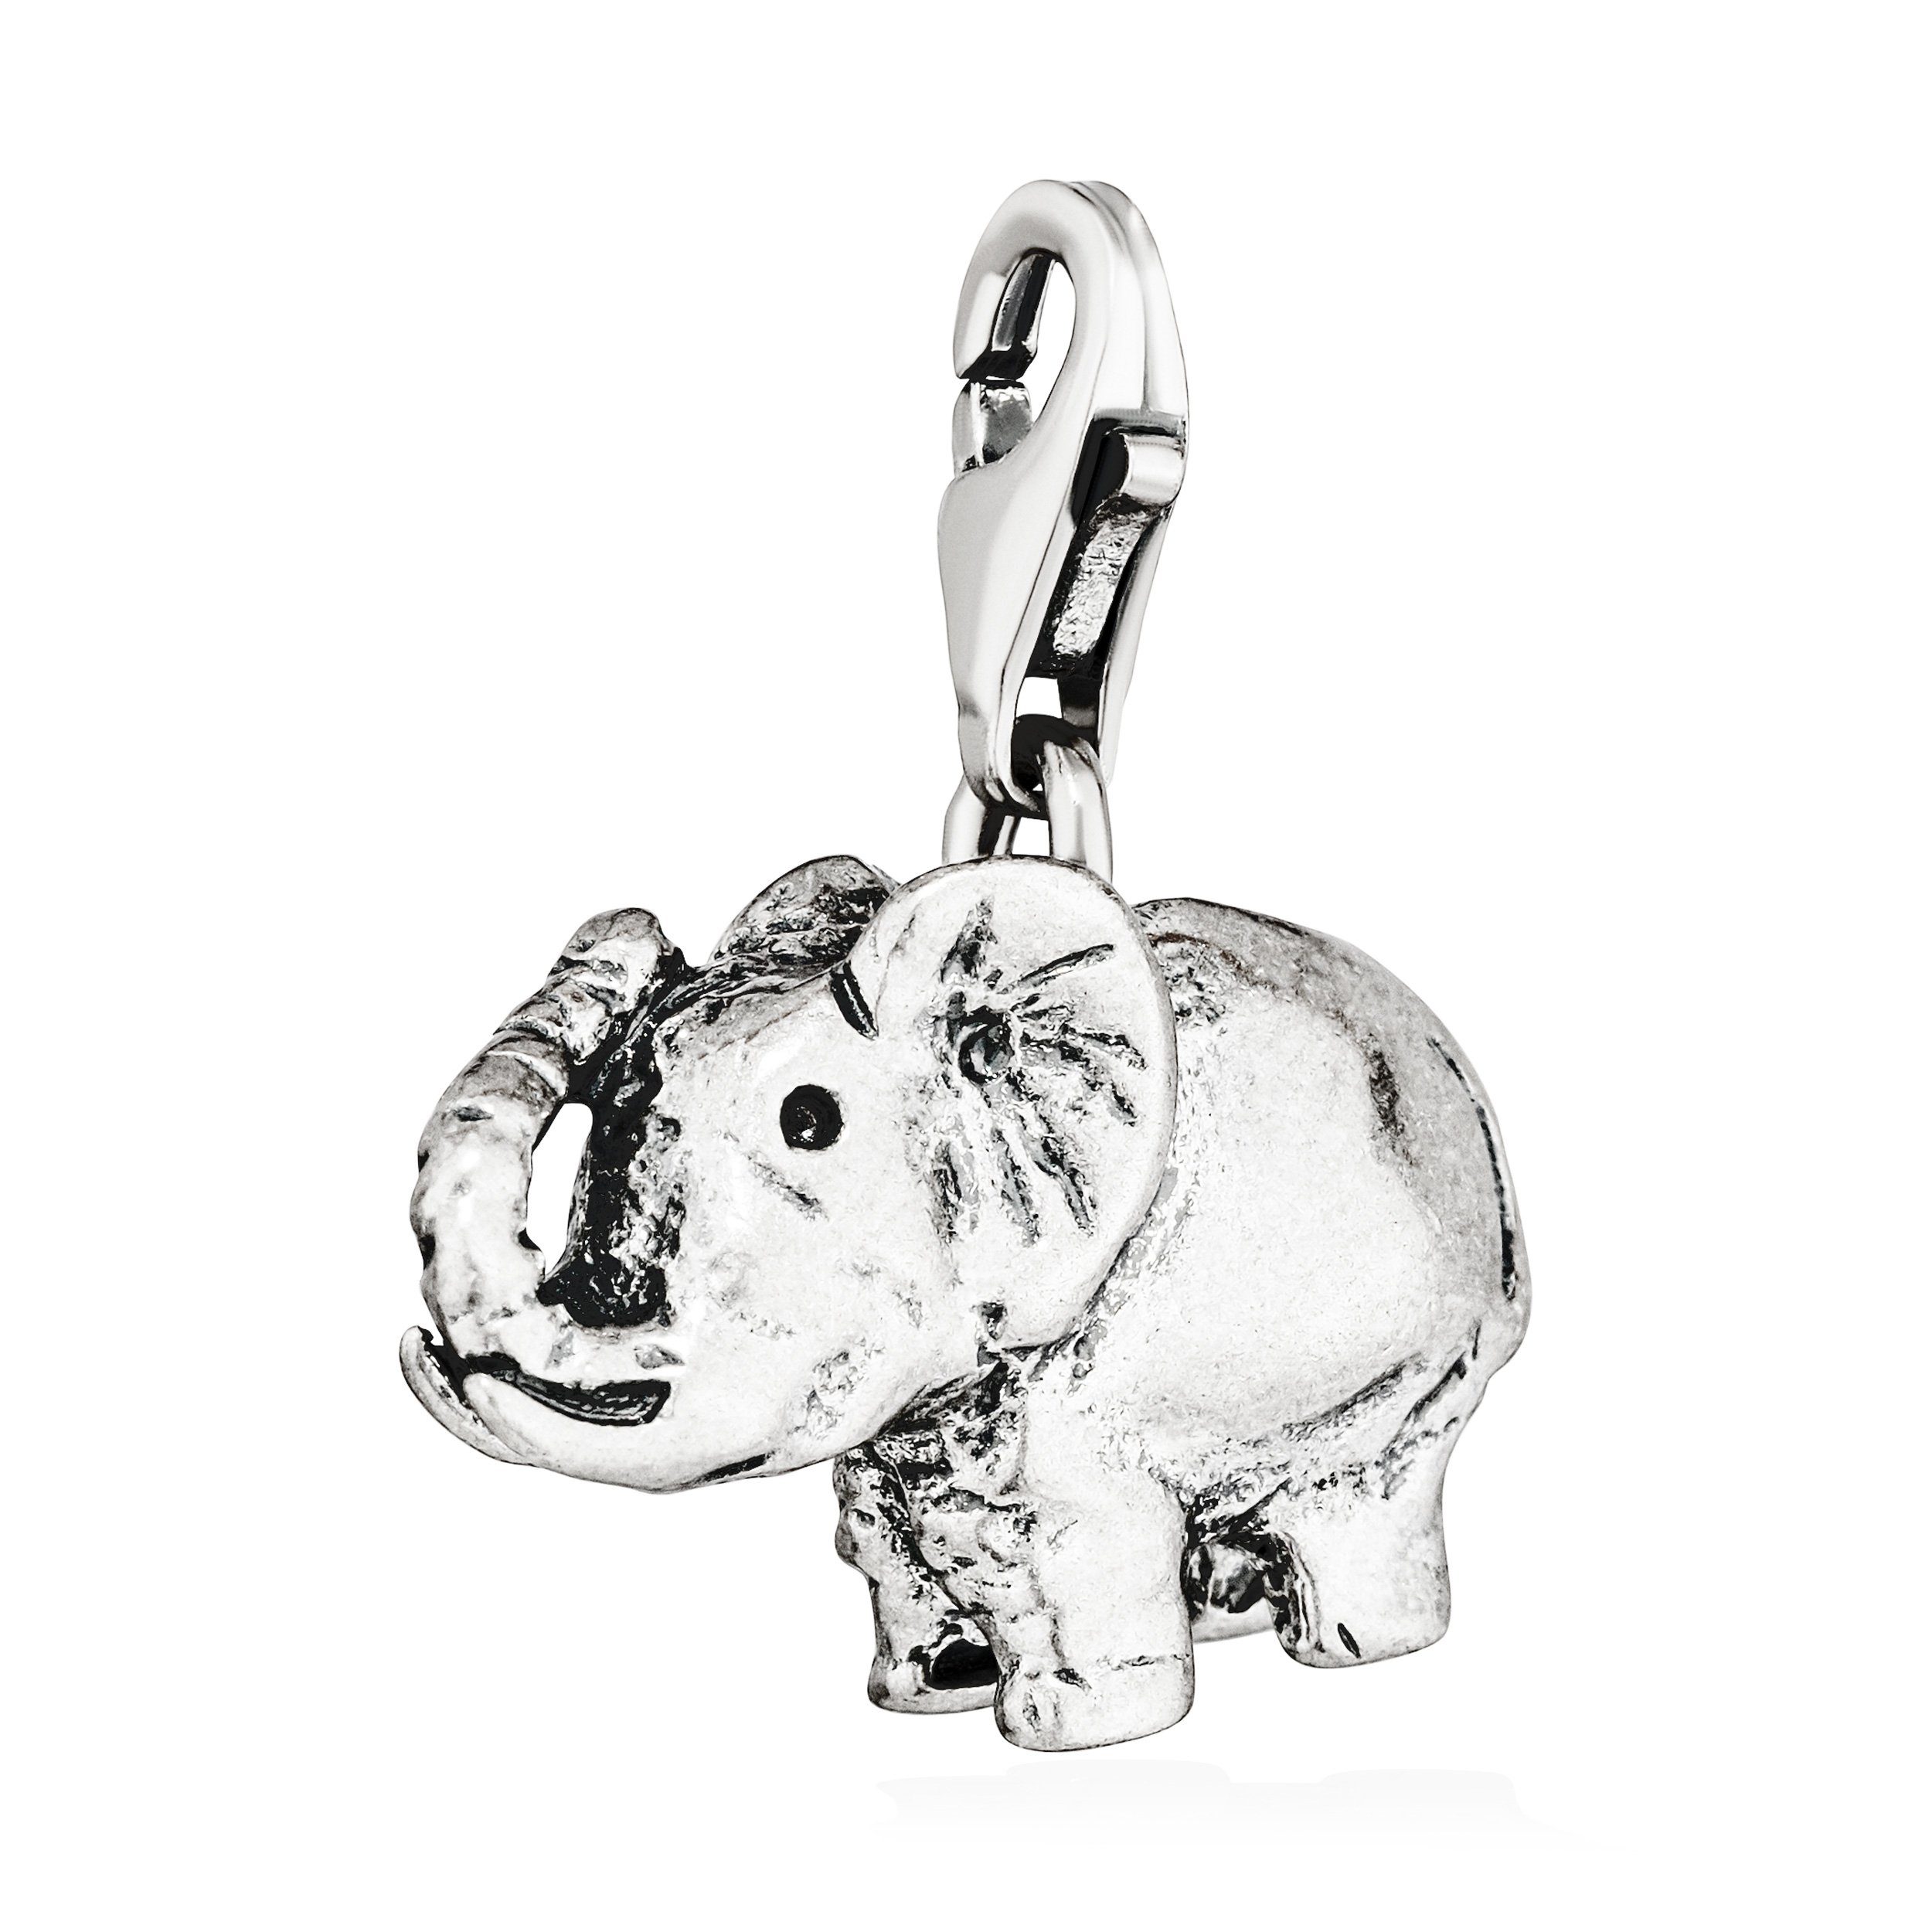 NKlaus Kettenanhänger Charm-Anhänger Elefant 925 Silber antik 14x17mm Silberanhänger Amulett